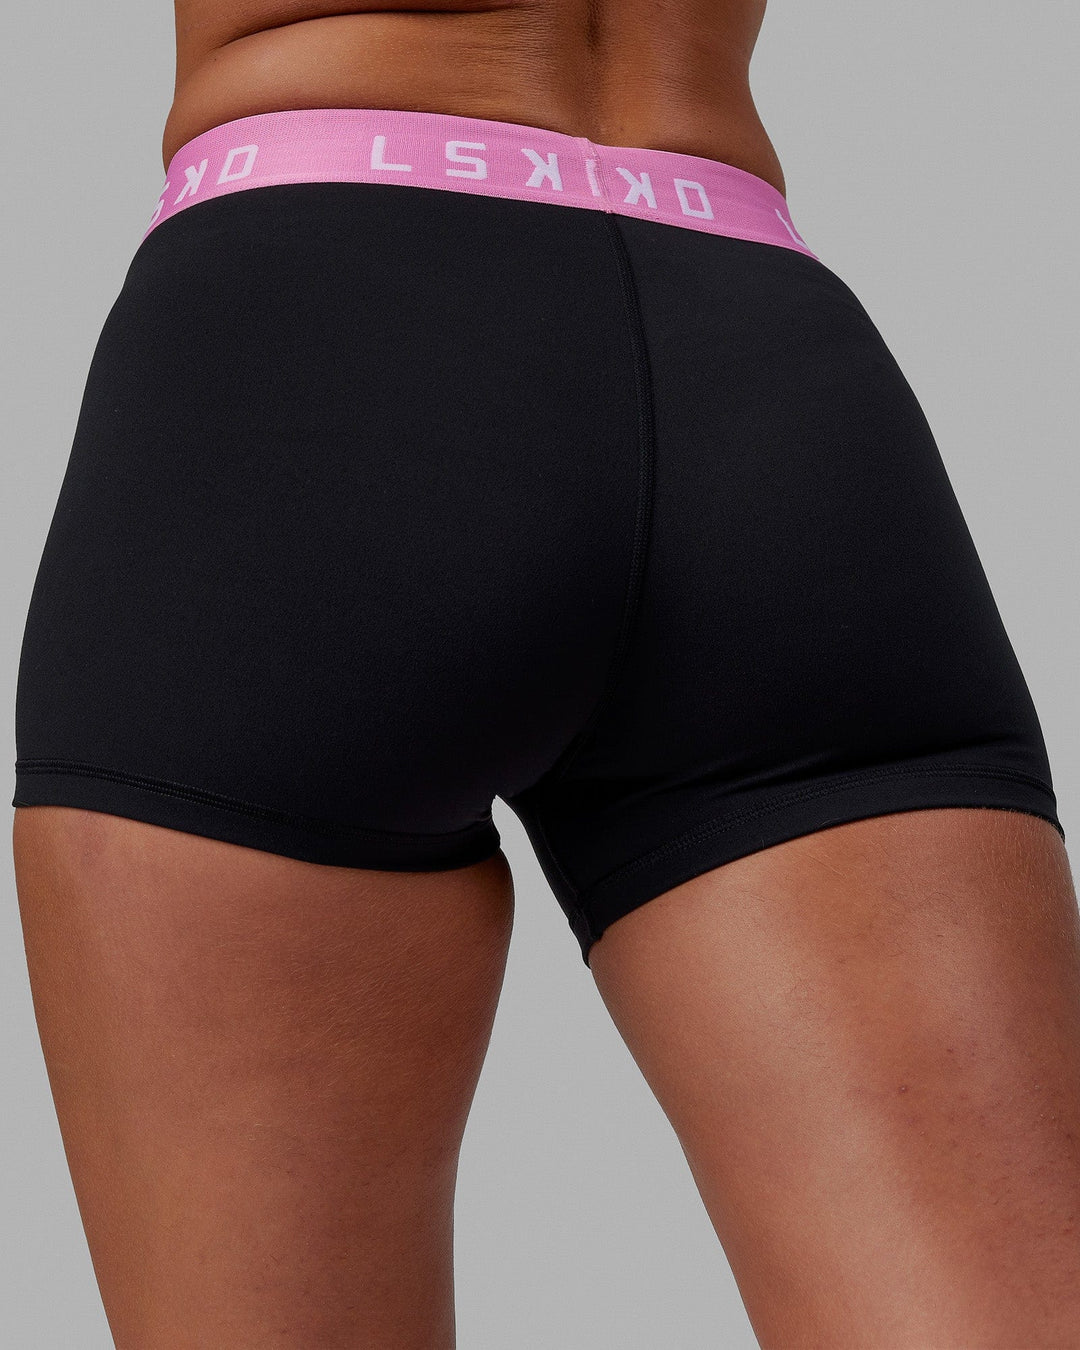 Extend X-Length Shorts - Black-Spark Pink